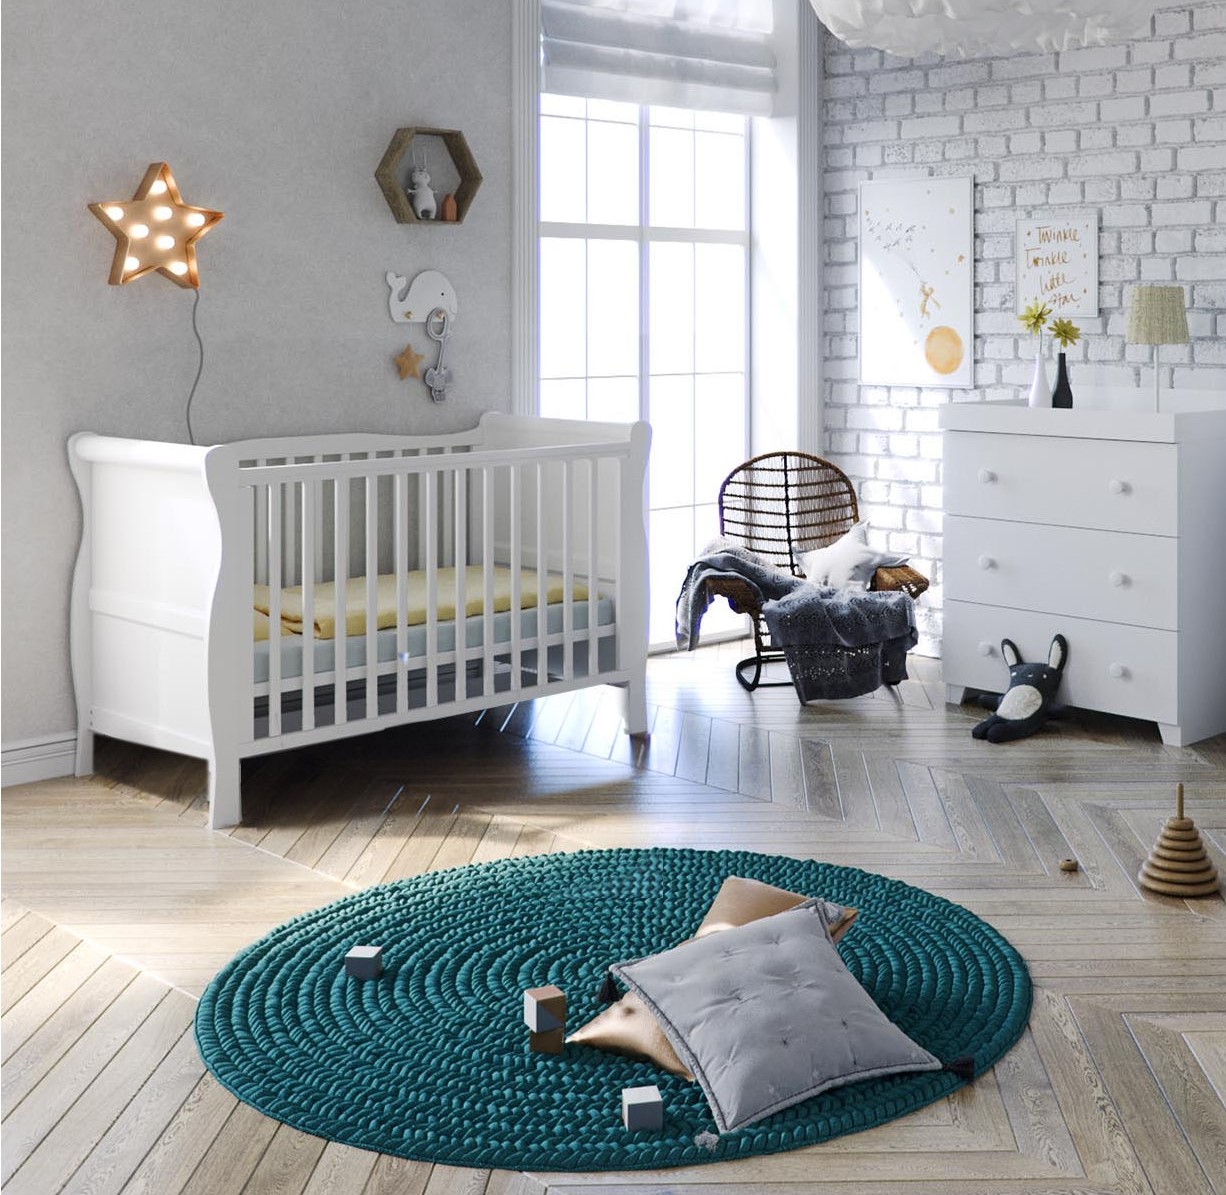 Little Acorns Sleigh 4 Piece Nursery Room Set - Cot Bed With Deluxe 4inch Foam Mattress & Dresser - White